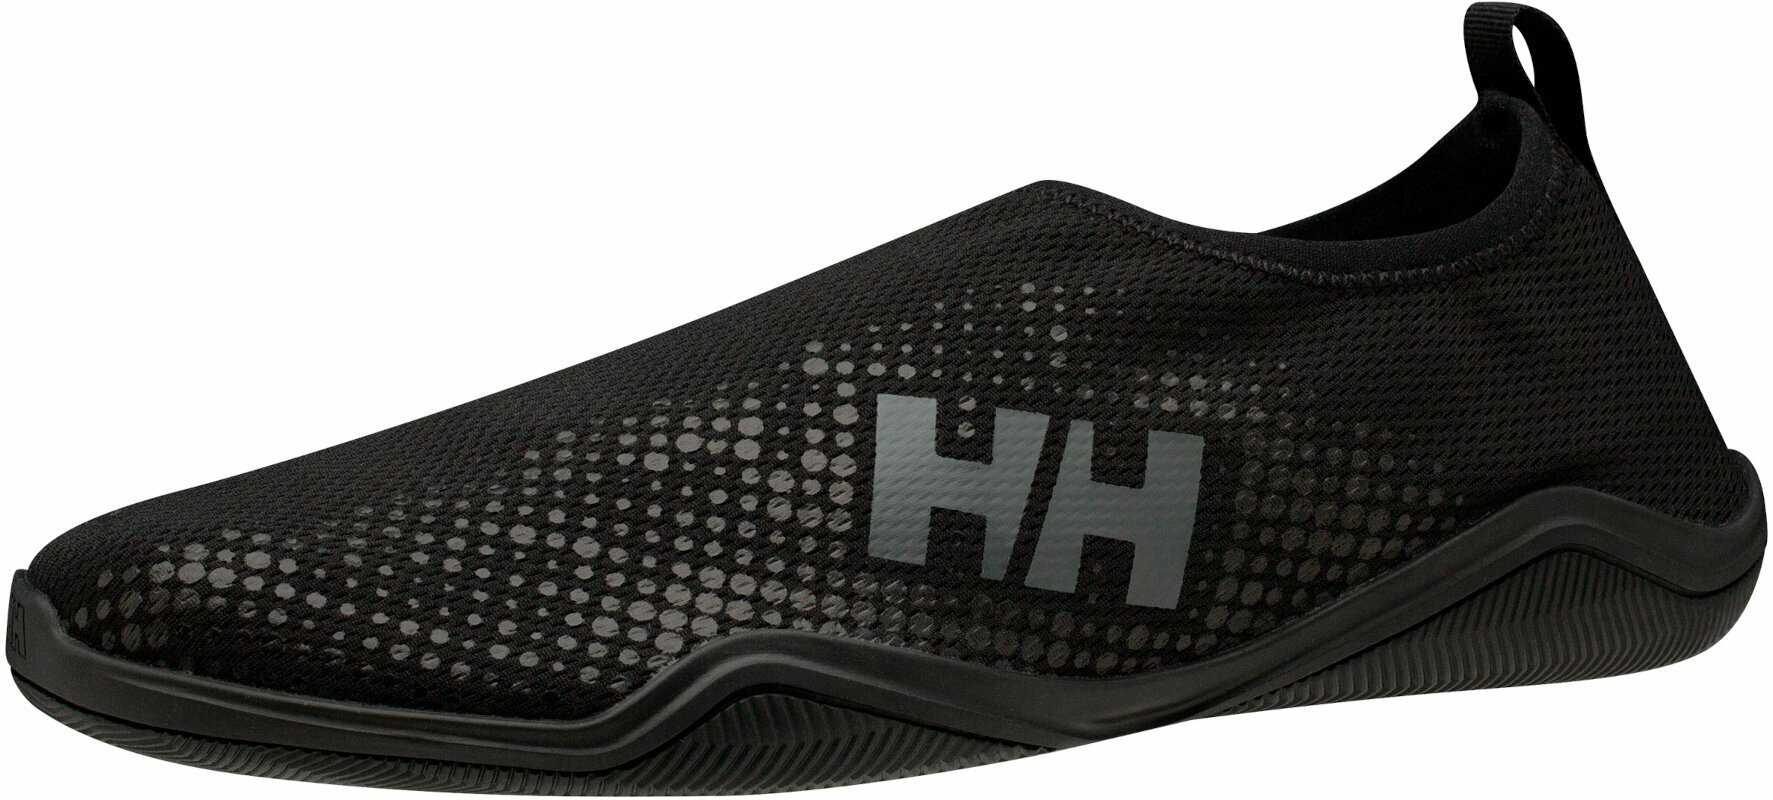 Herrenschuhe Helly Hansen Men's Crest Watermoc Black/Charcoal 43